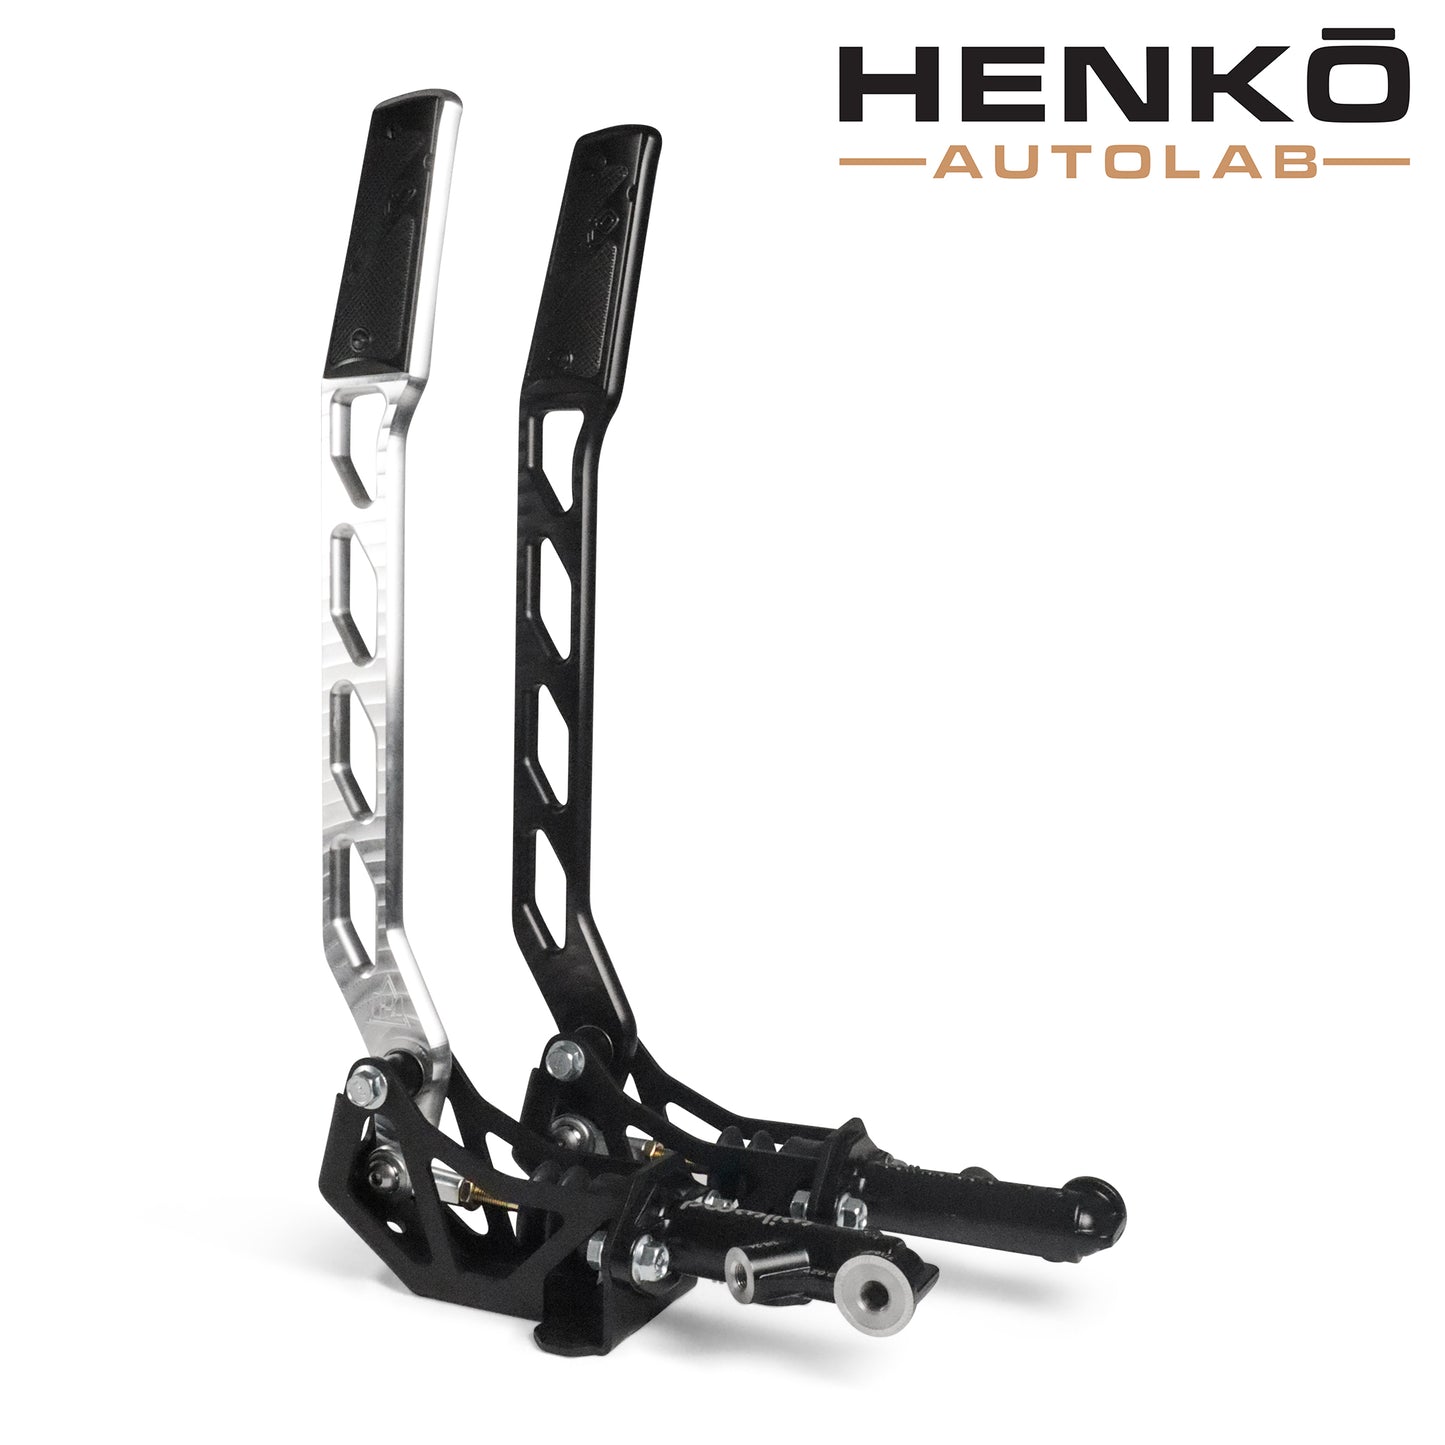 Henko AutoLab - Low Pro Reverse -350Z/G35 Edition Hydro E Brake